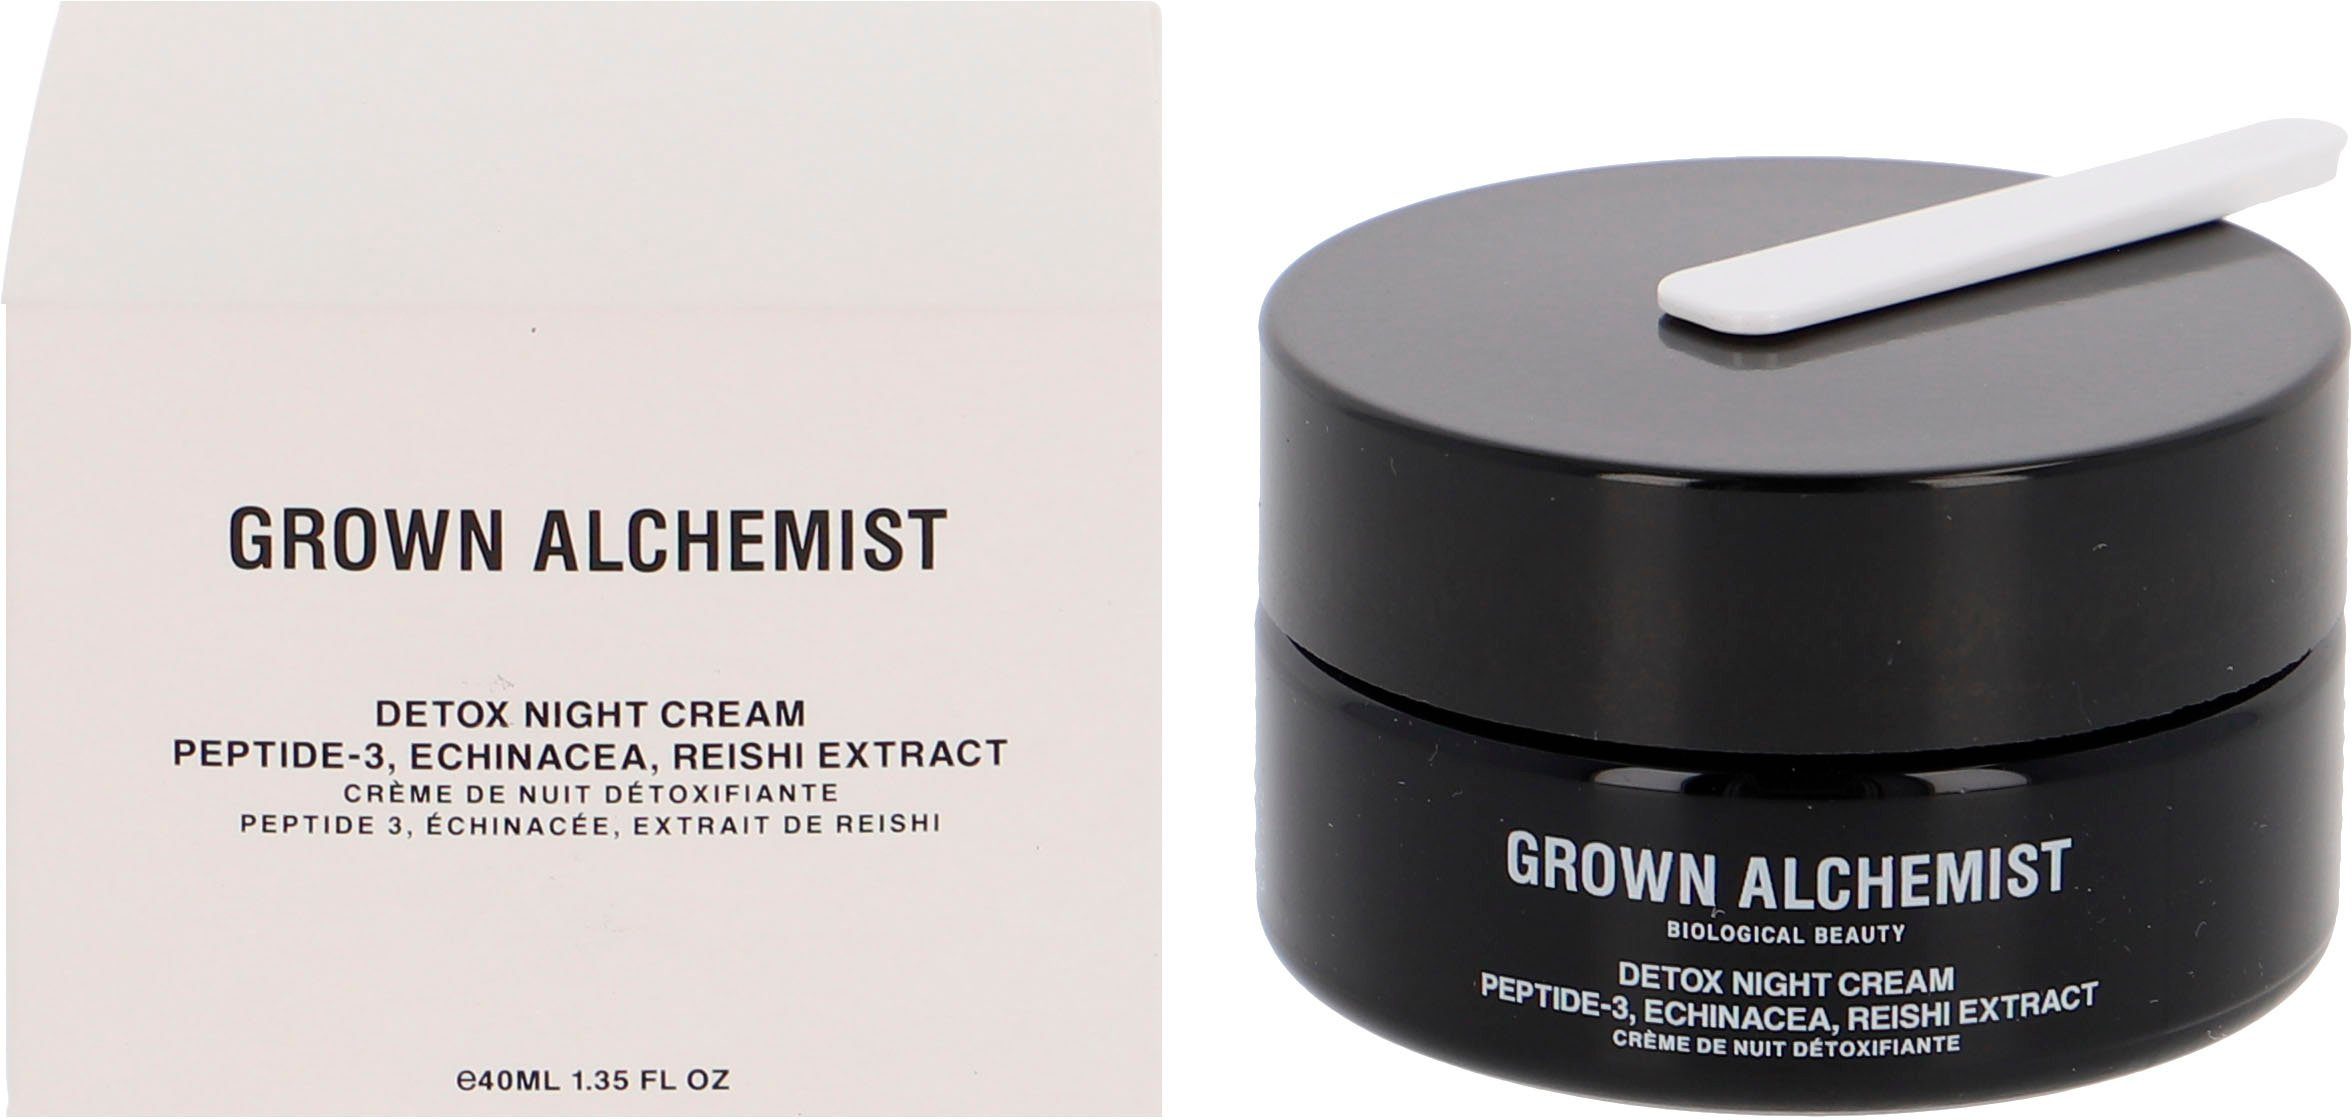 Nachtcreme Detox Night Echinacea, Reishi Cream, Extract GROWN ALCHEMIST Peptide-3,